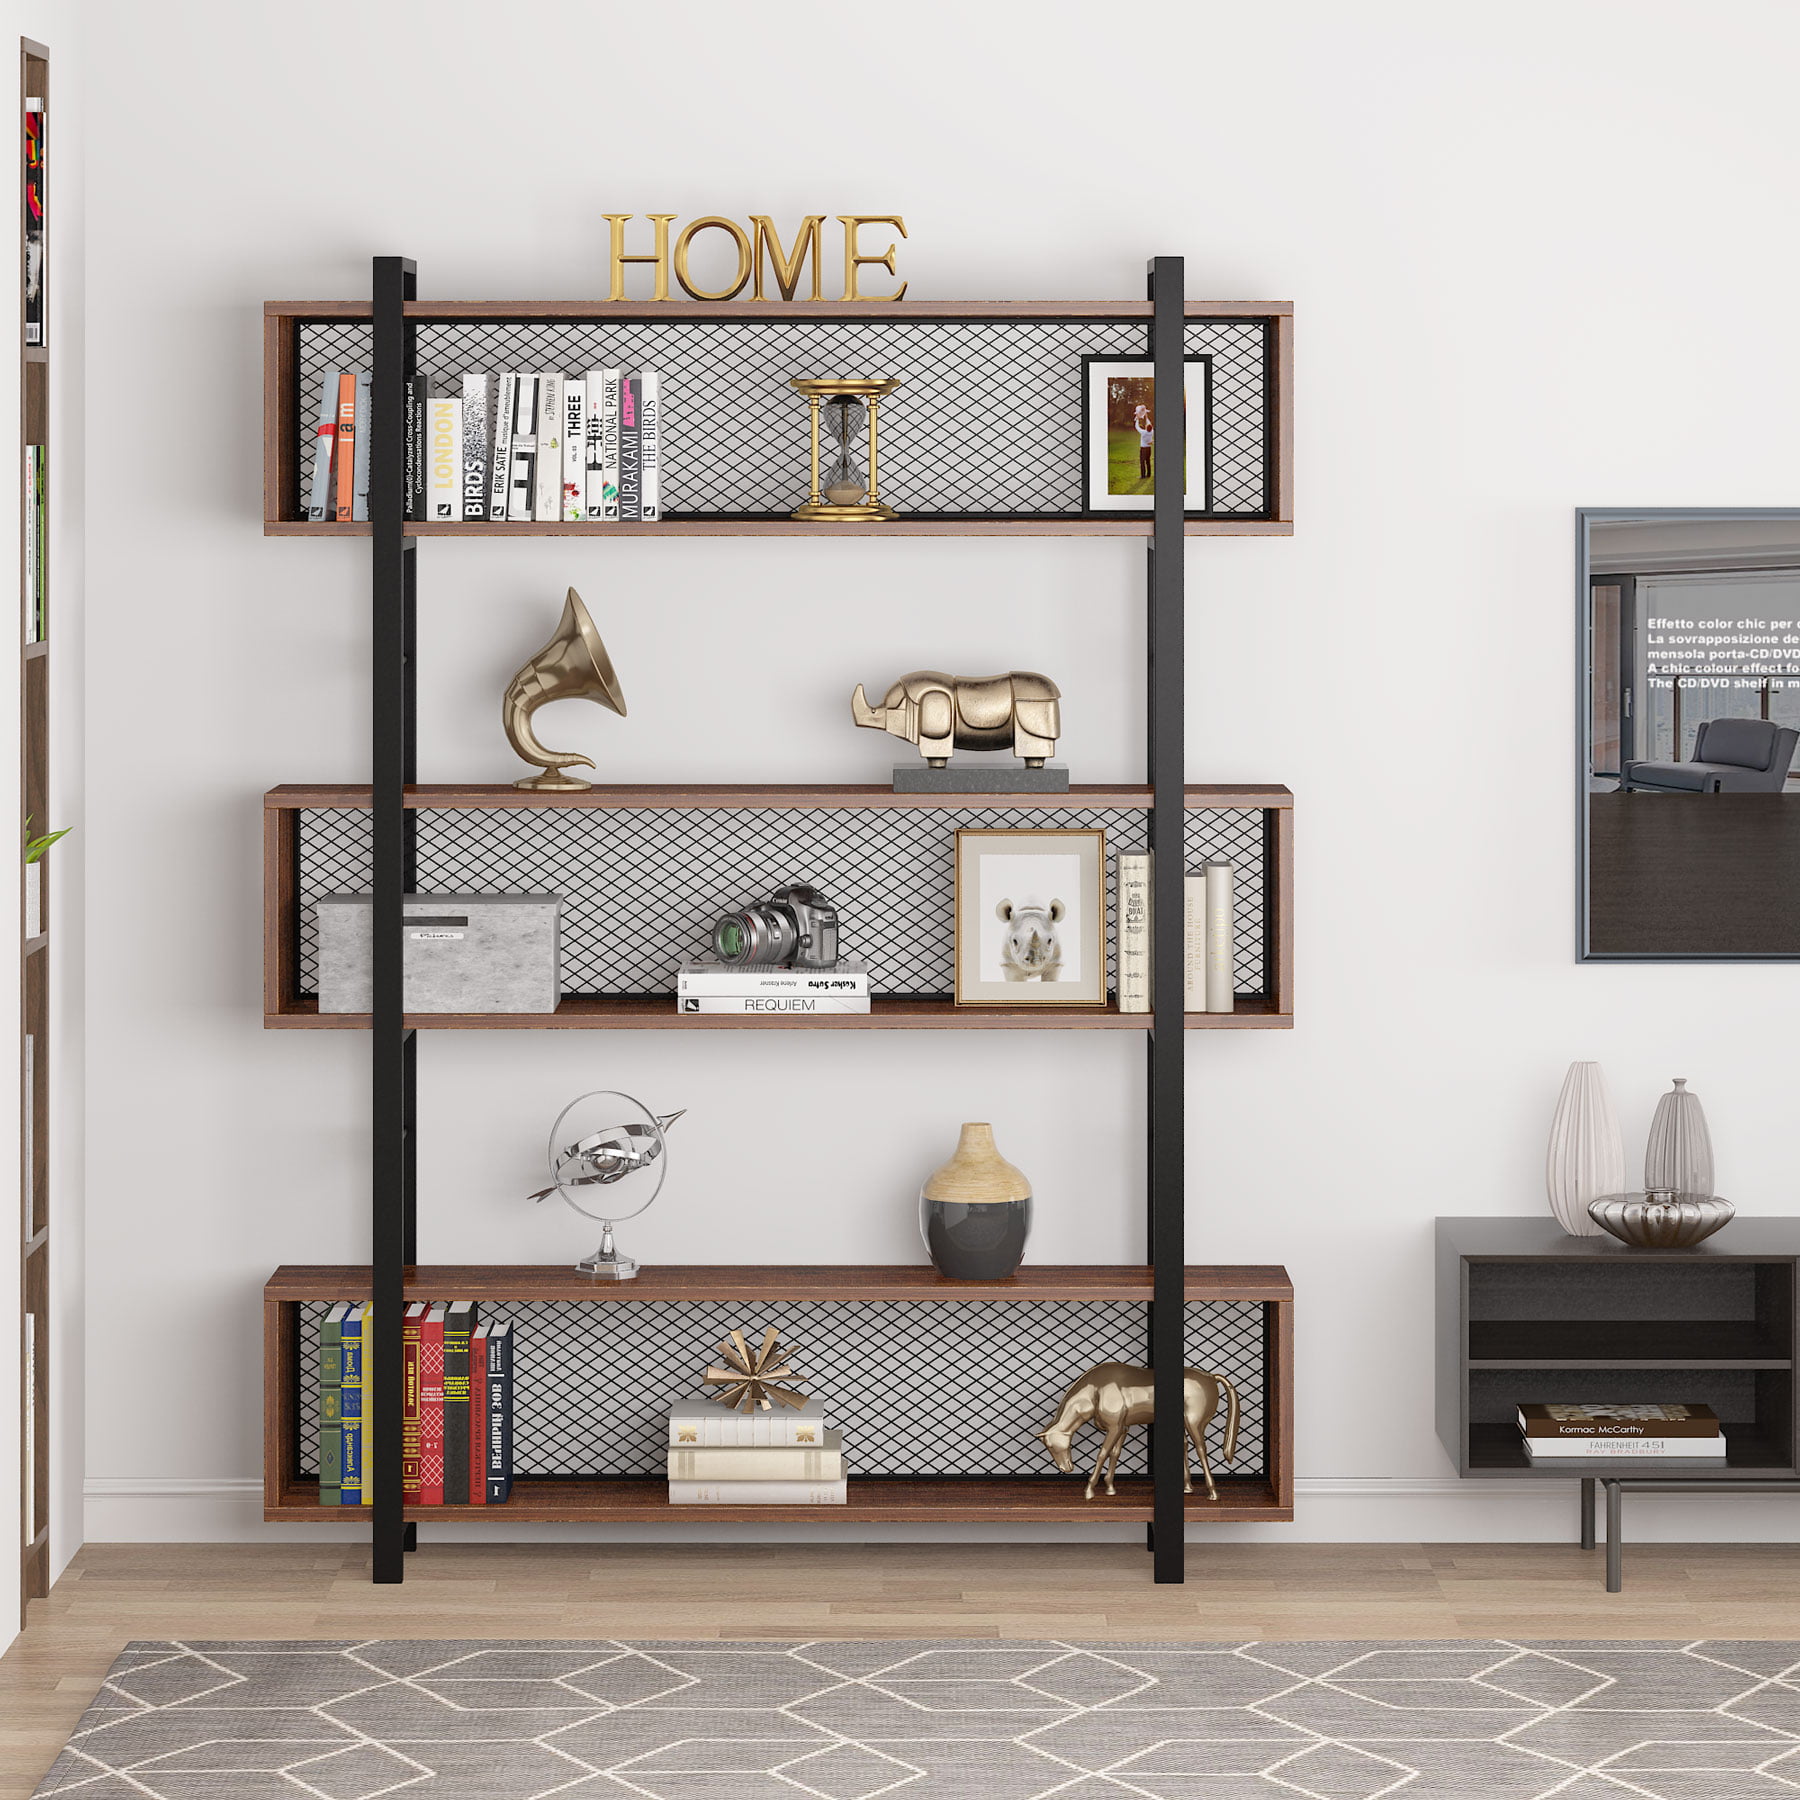 STURDIS Solid Wood Black Metal Industrial Bookshelf 4 Tier Visually Appealing & High Capacity for Book Storage